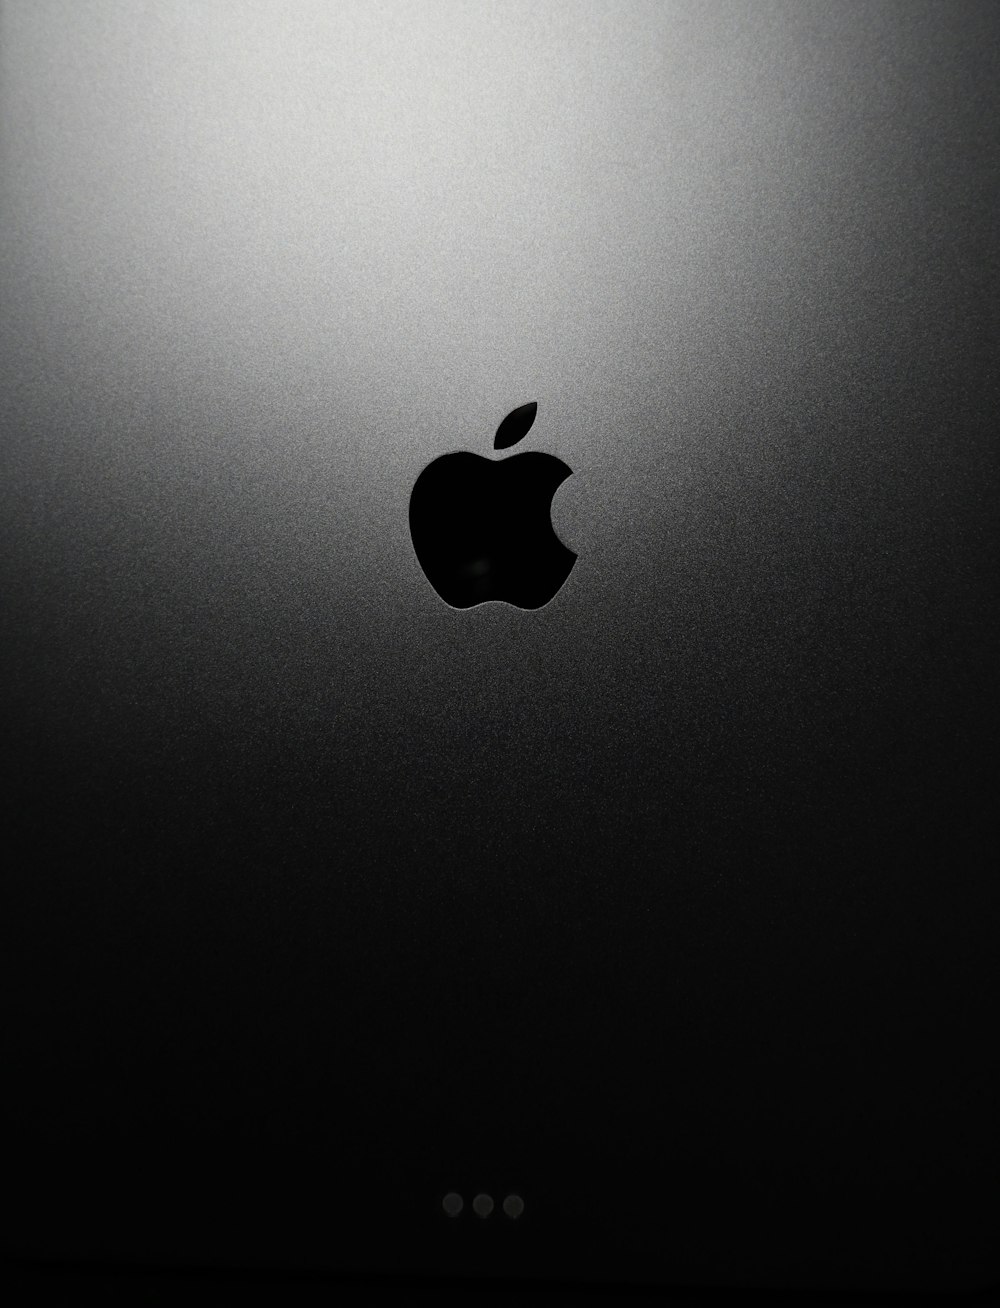 black apple logo on black surface